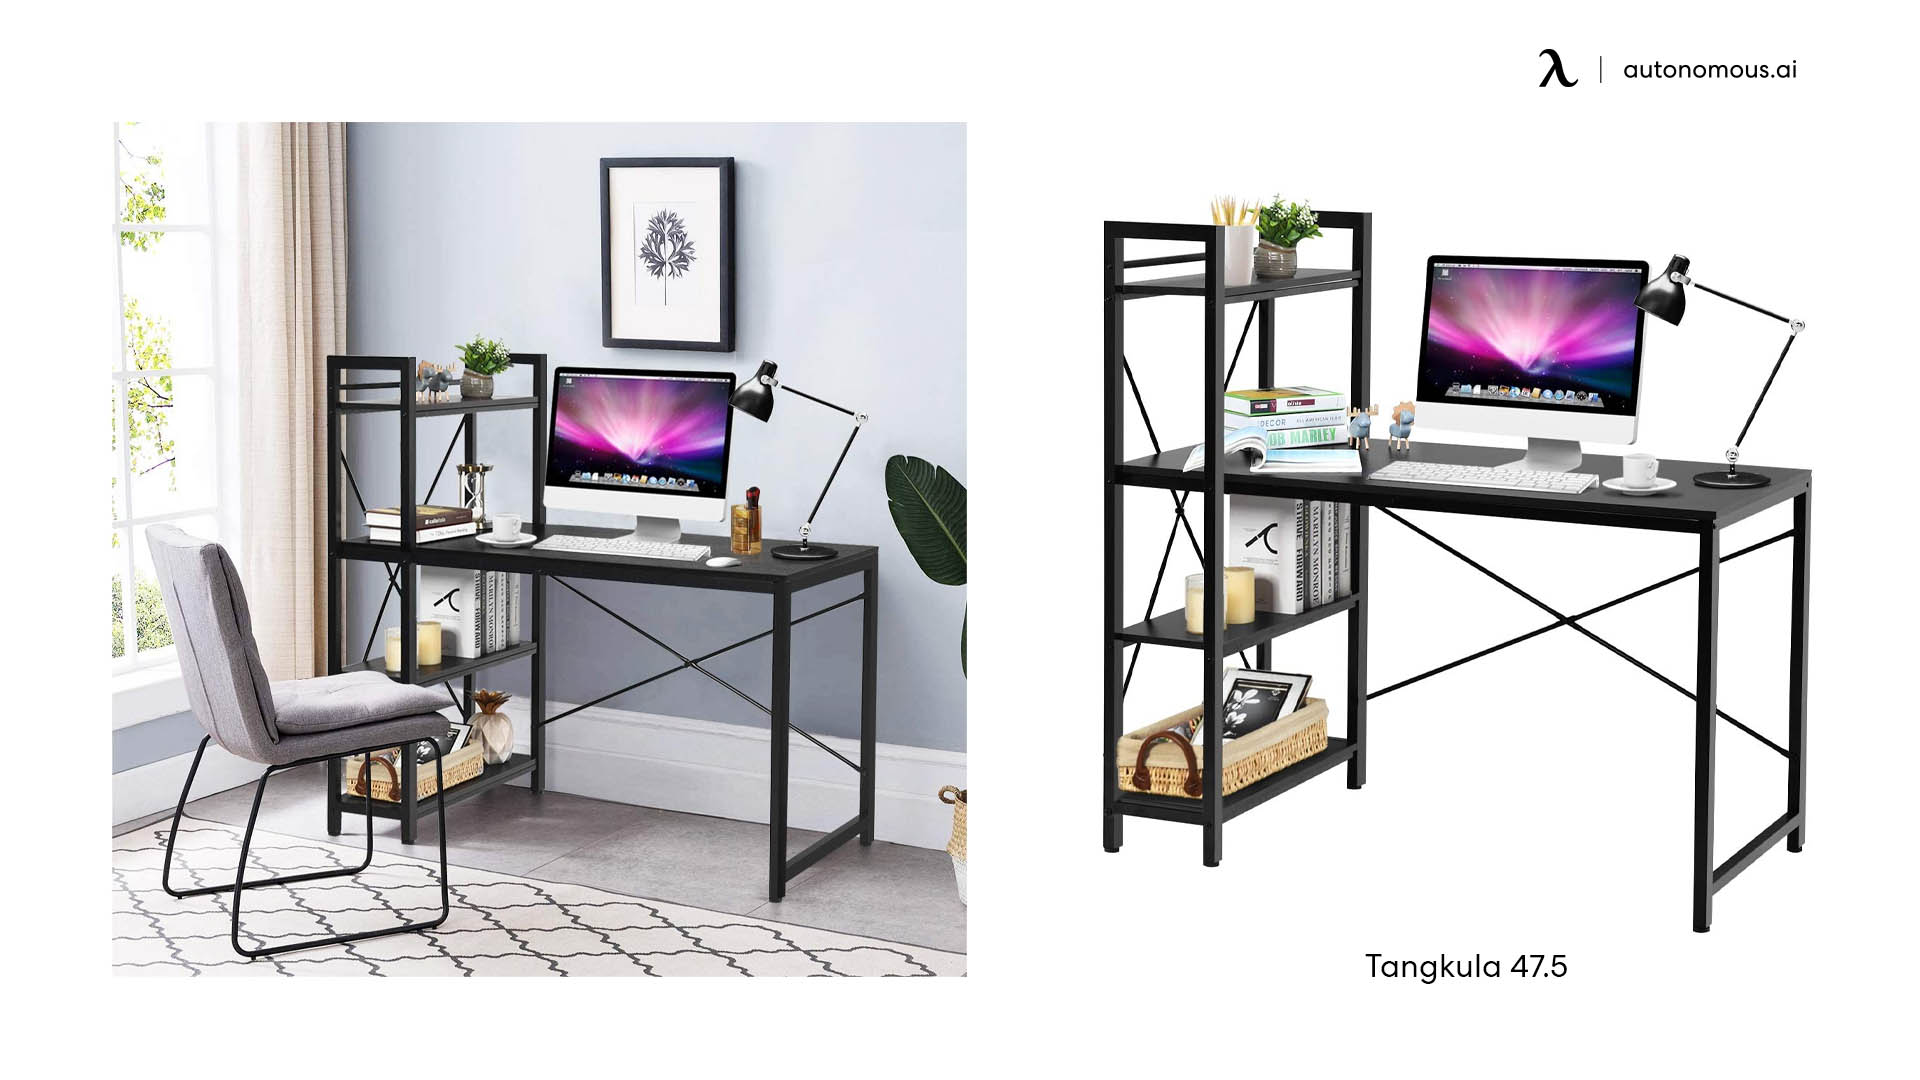 Tangkula 47.5” Computer Desk with 2 Storage Drawers - Small Computer Table Study Writing Desk